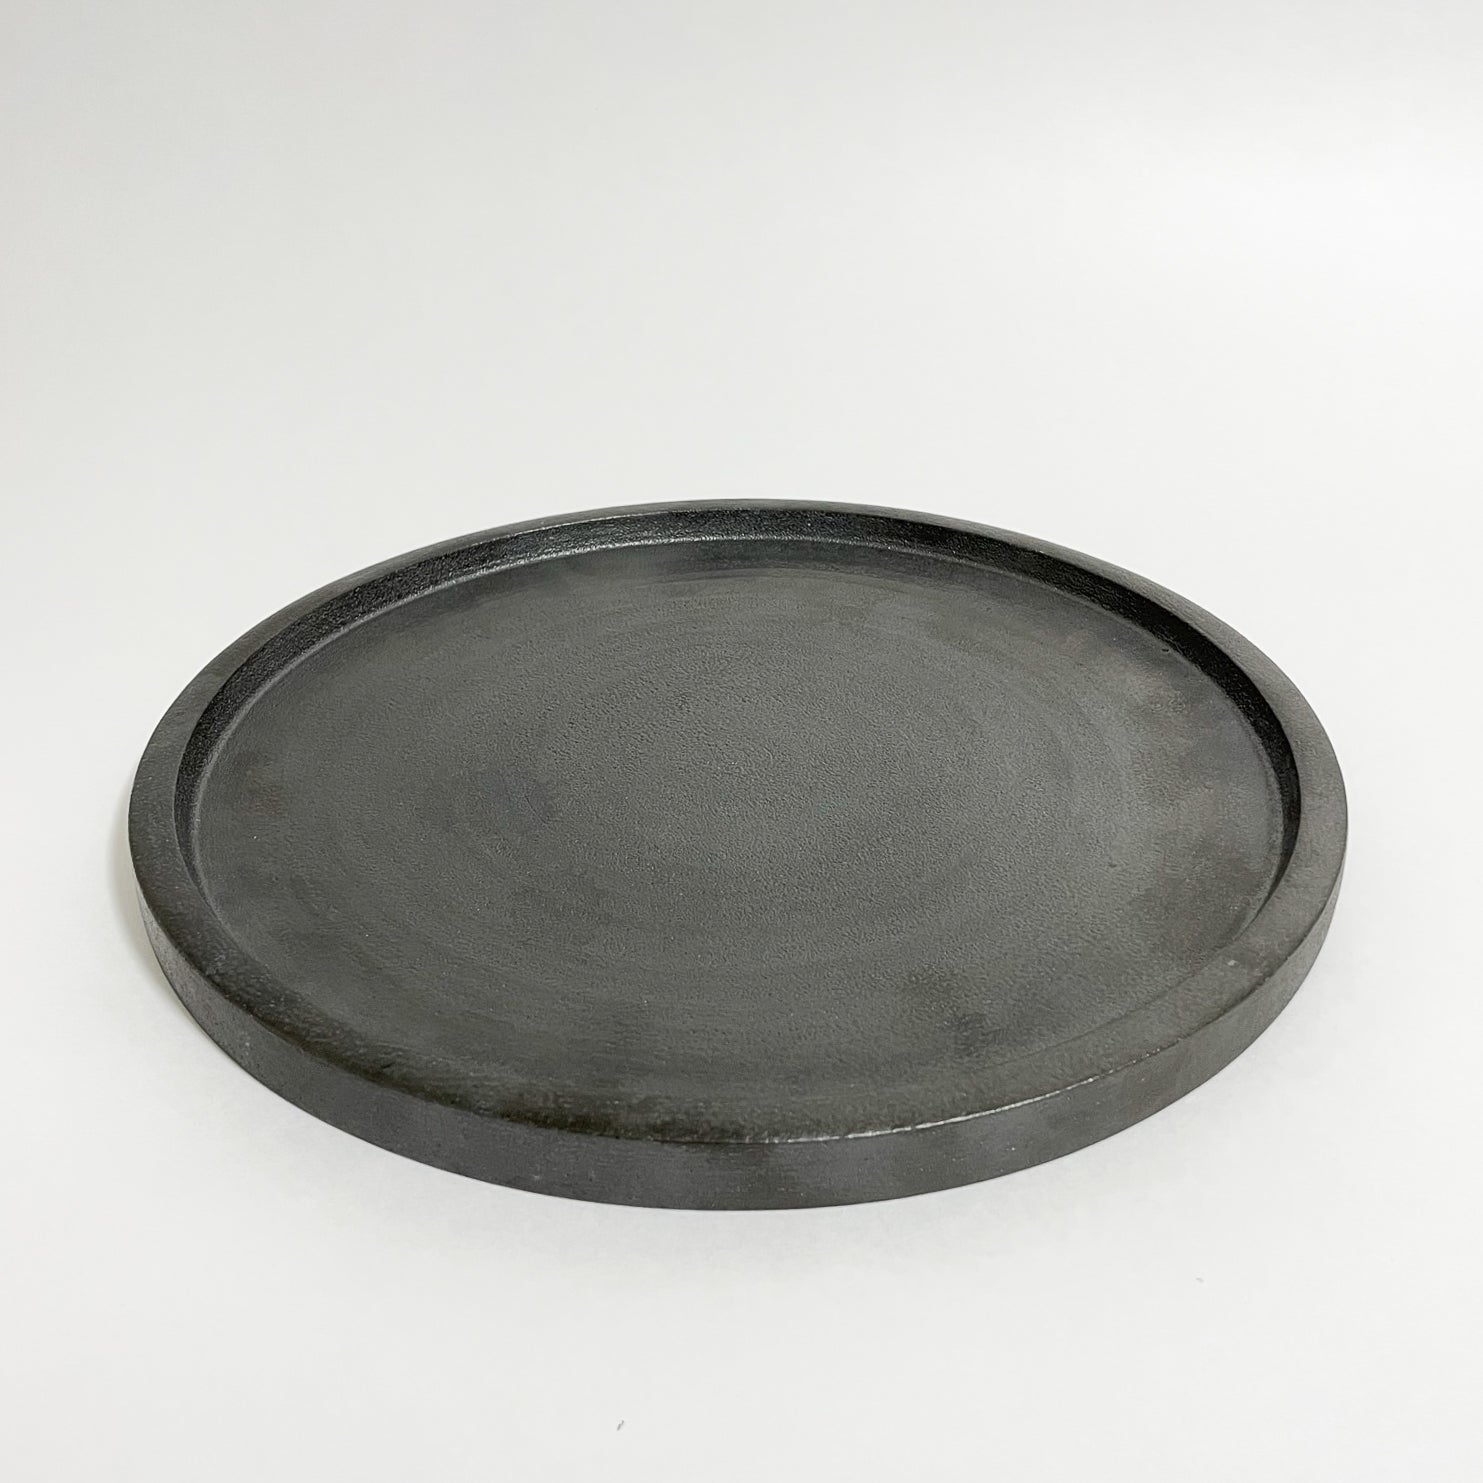 Agano Ware Plate